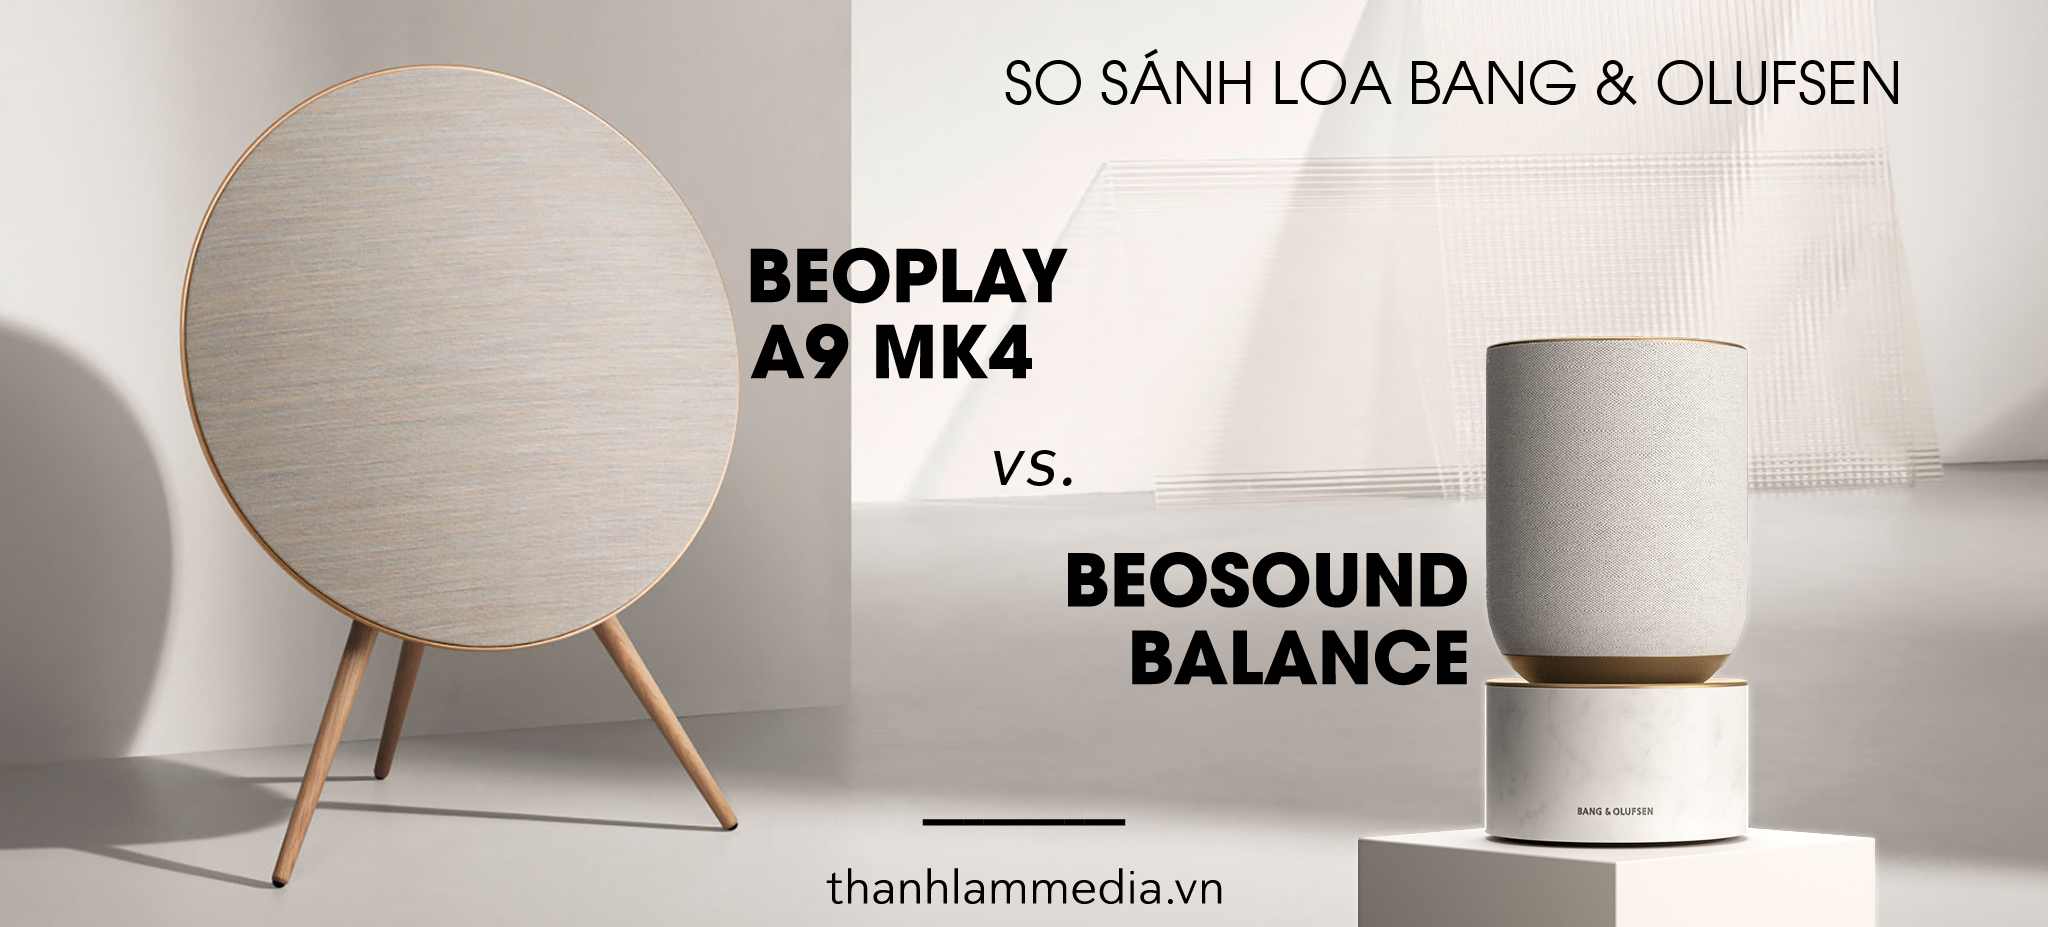 SO SÁNH HAI MẪU LOA BANG & OLUFSEN: BEOPLAY A9 MK4 vs BEOSOUND BALANCE 13